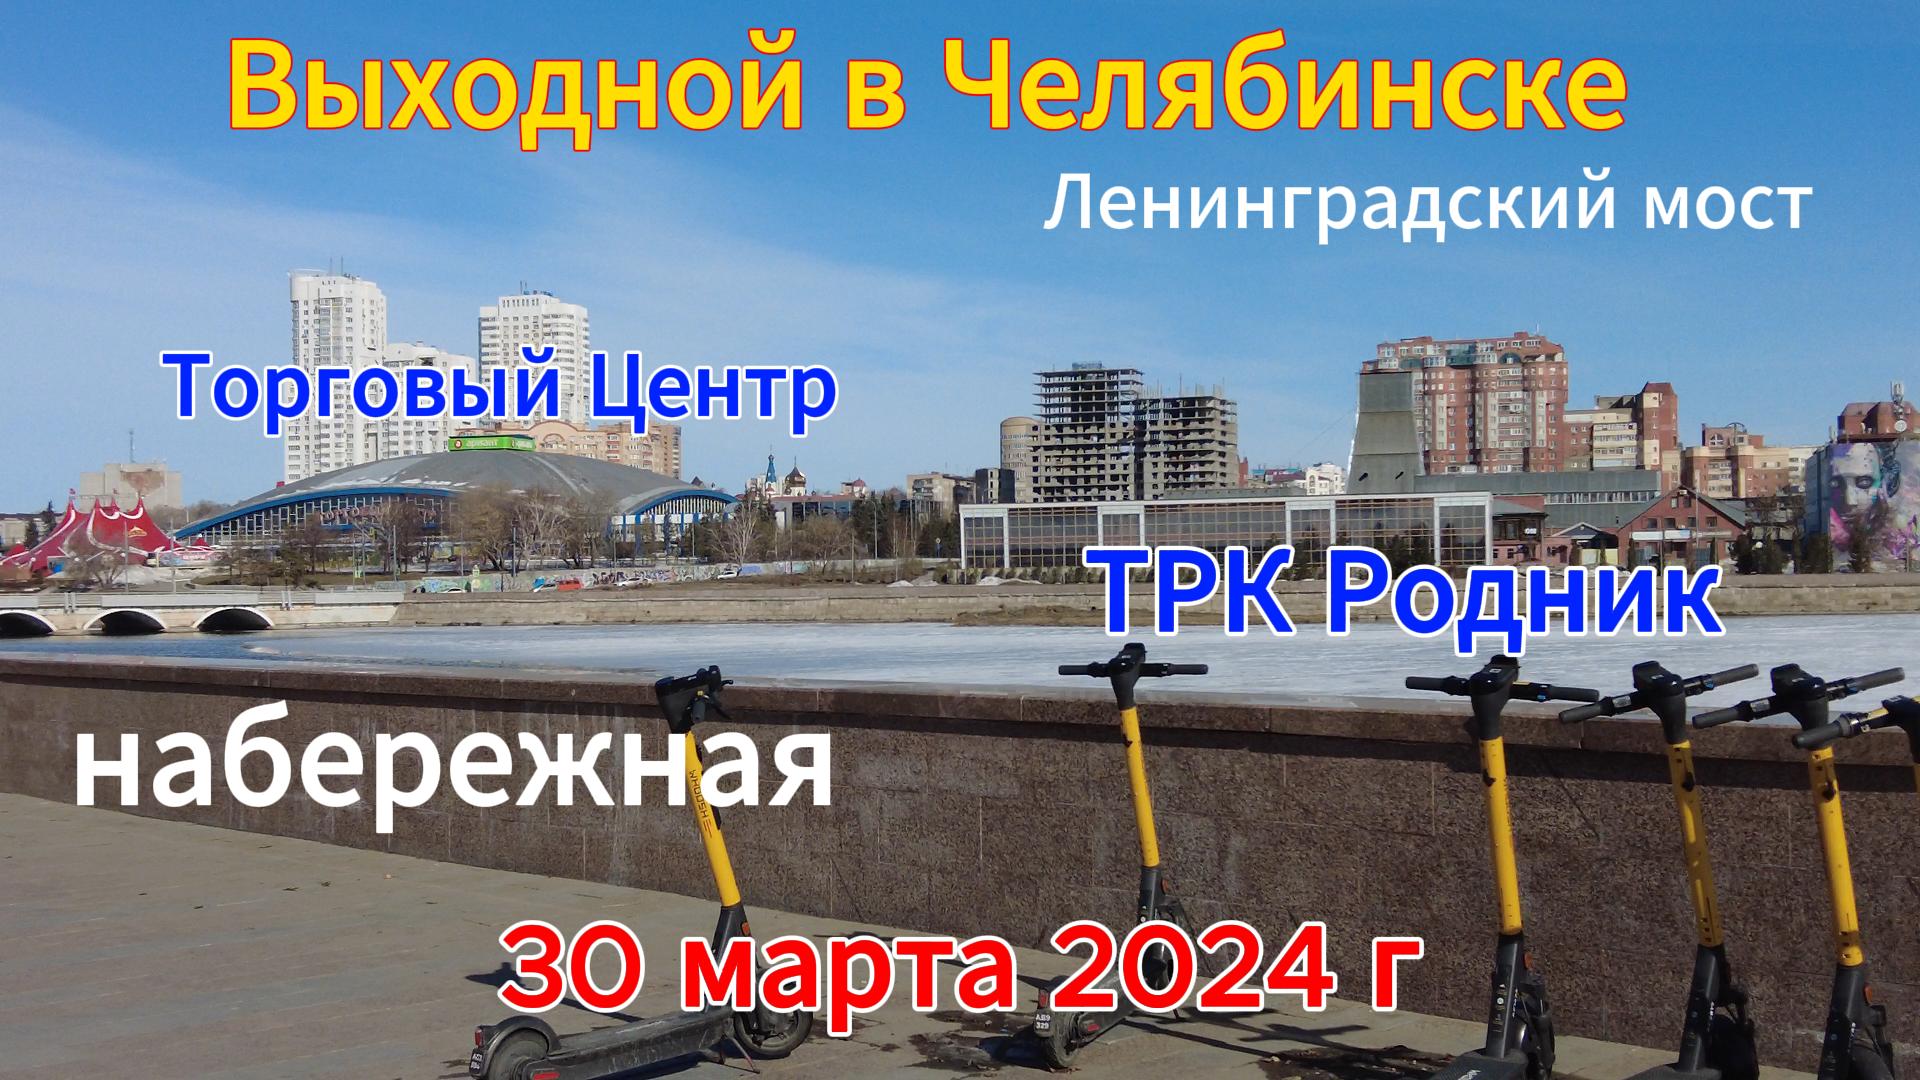 Ленинградский мост, набережная и ТЦ 30 марта 2024 г